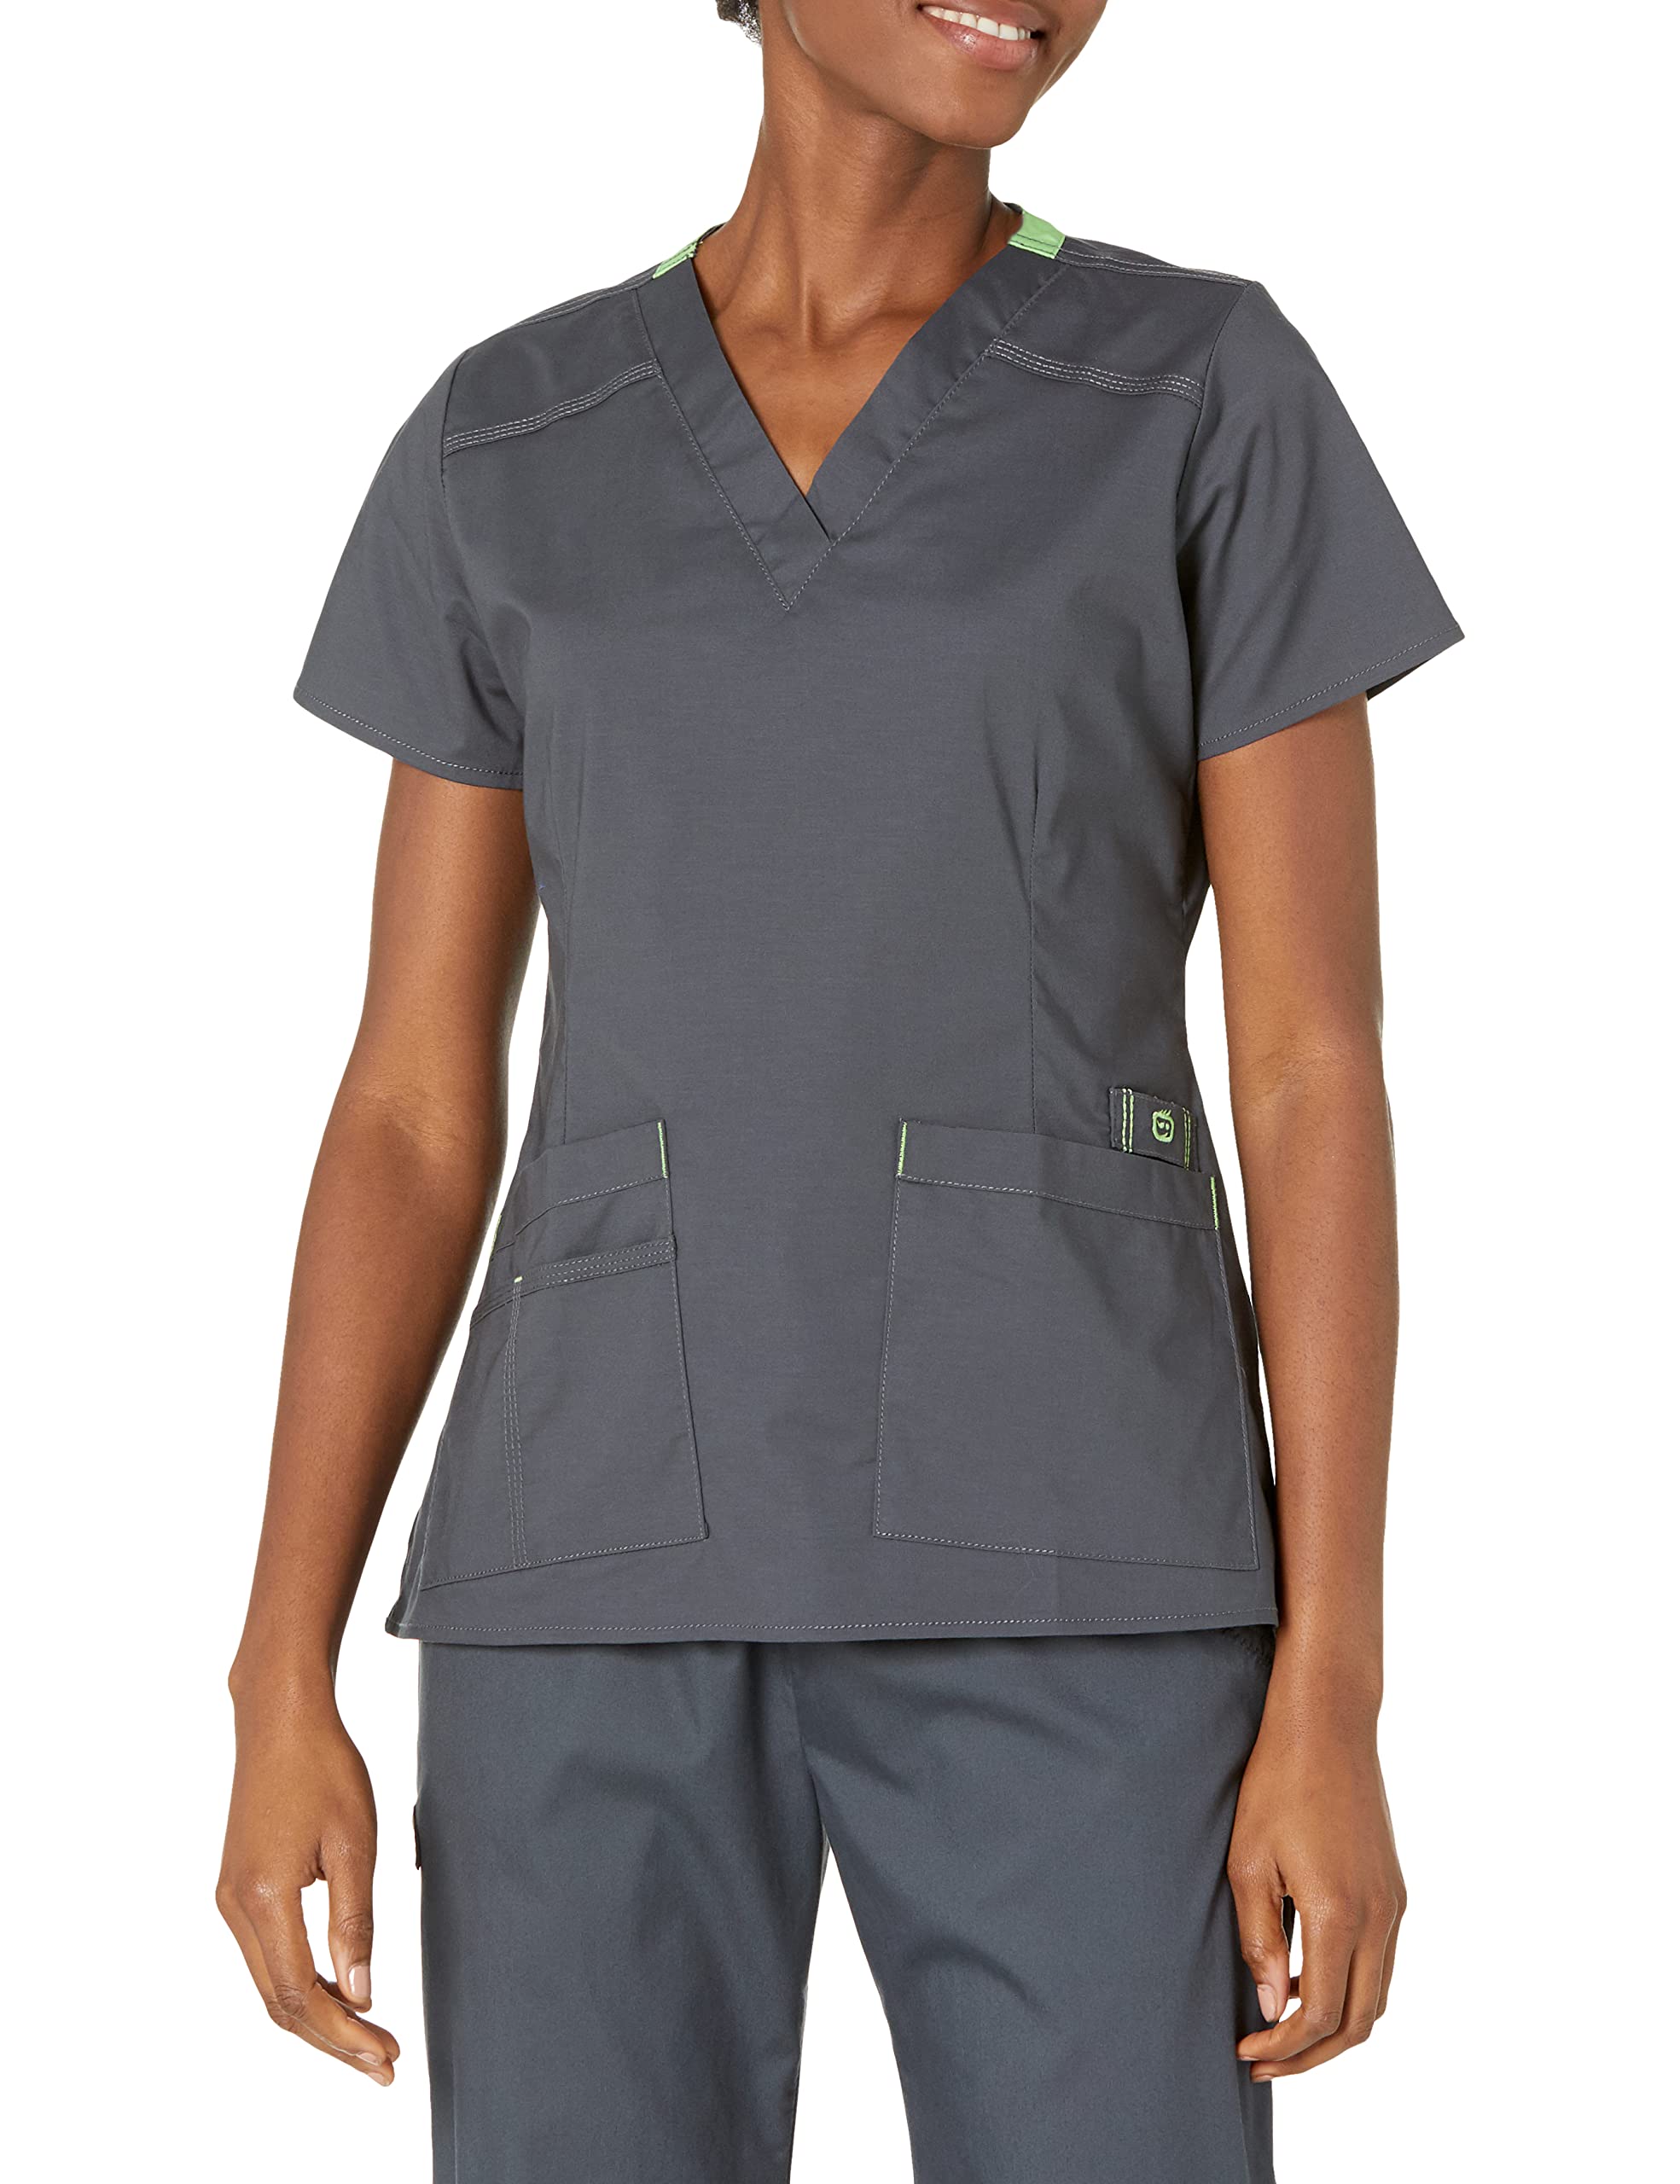 Wonderwink Womens Wonderflex Verity Womens Top Medical Scrubs Shirts, Charcoal, Xx-Large Us